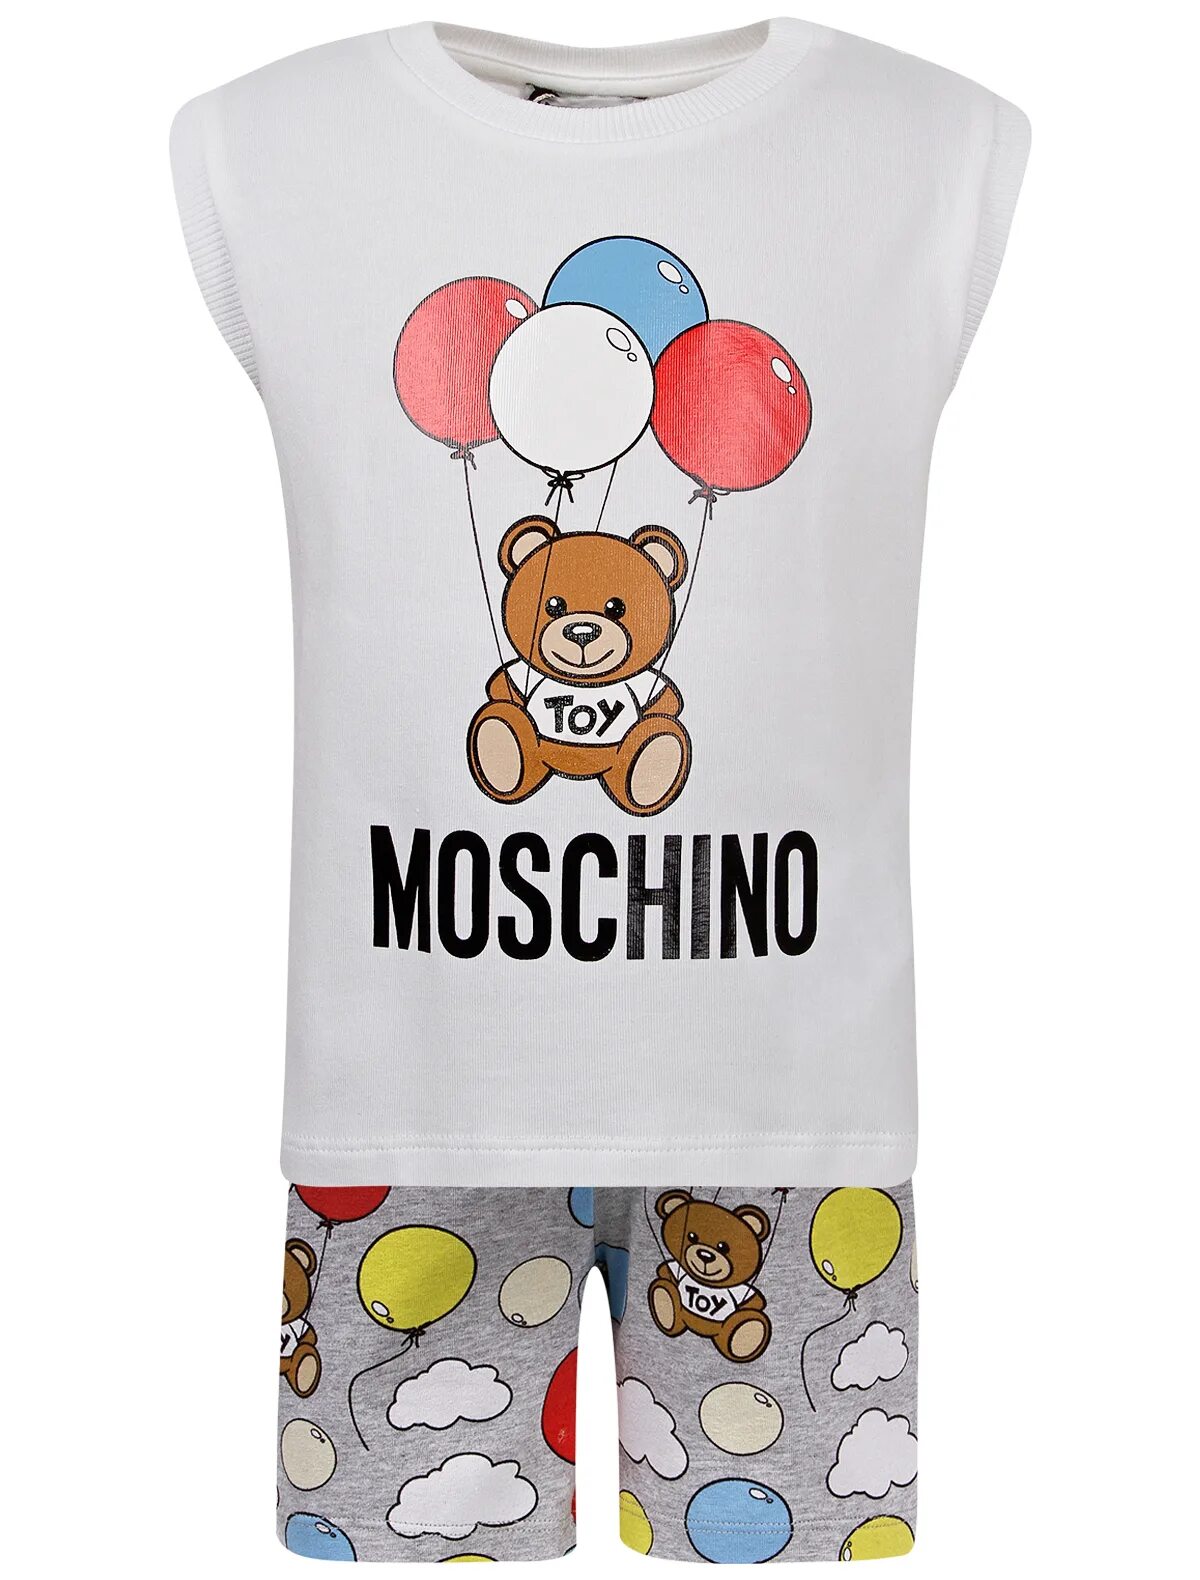 Moschino одежда. Moschino детская одежда. Moschino одежда для малышей. Москино одежда для детей футболка.